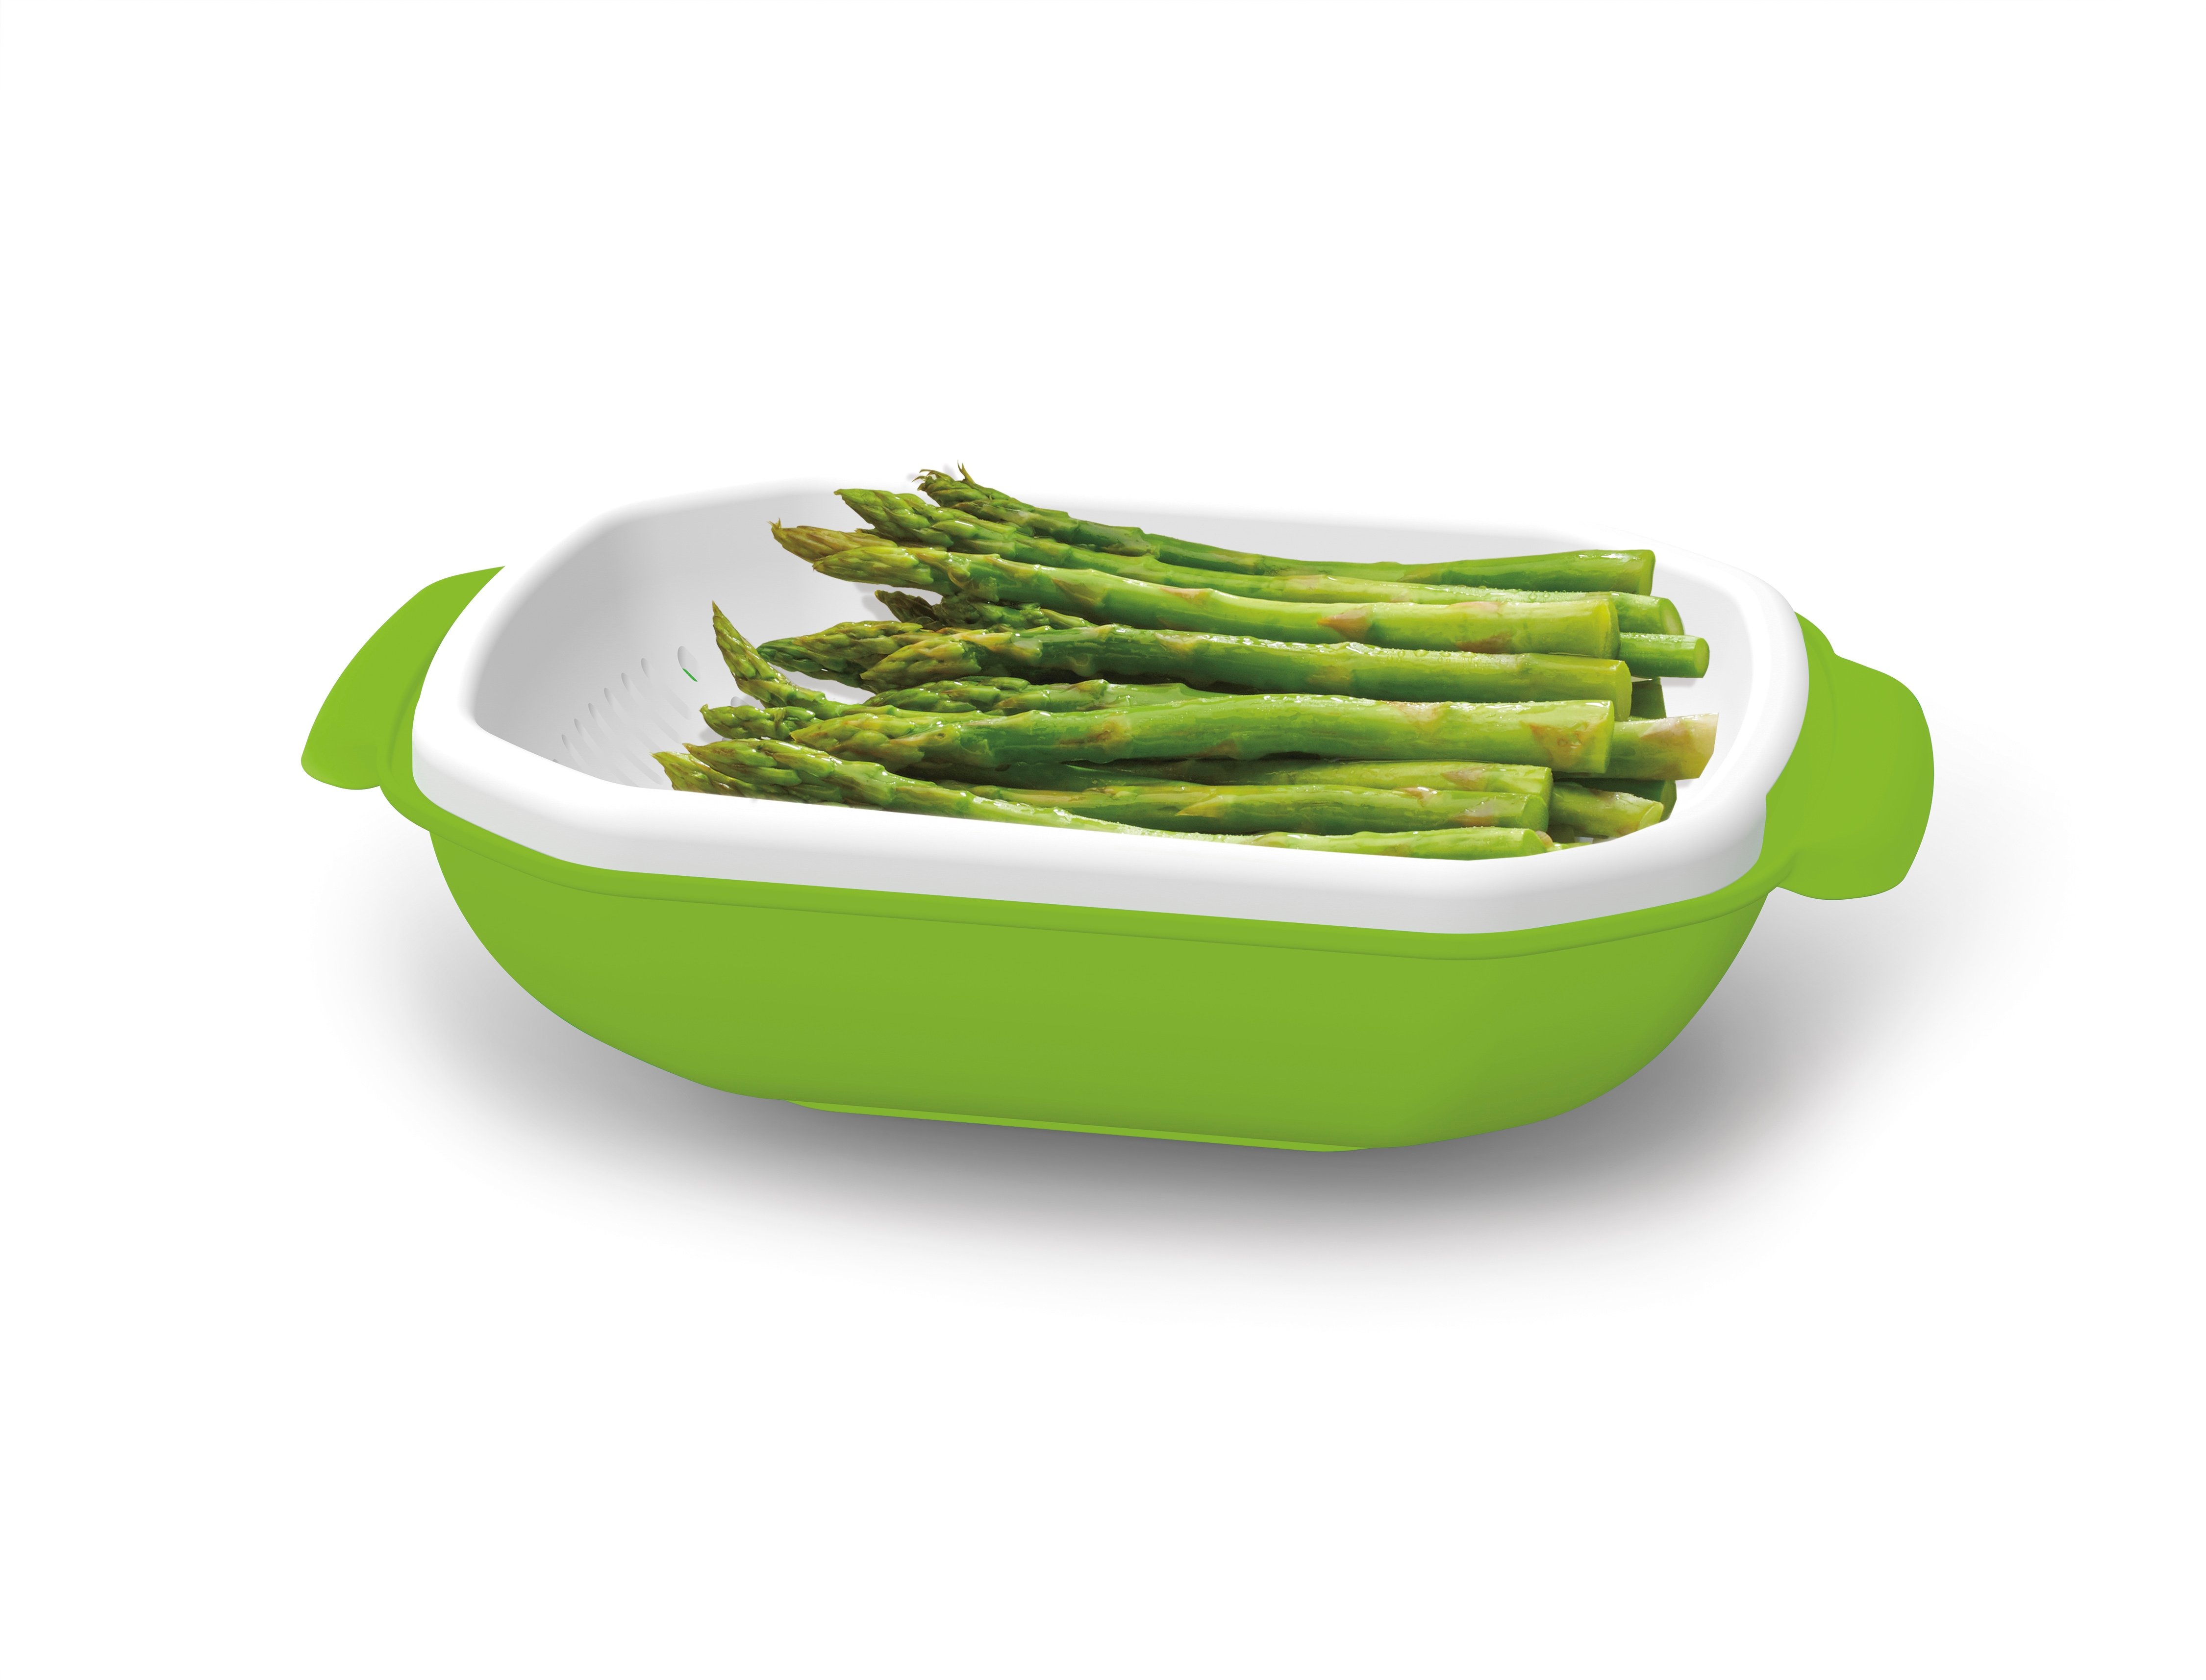 Cuisinart Microwave Steamer - Green